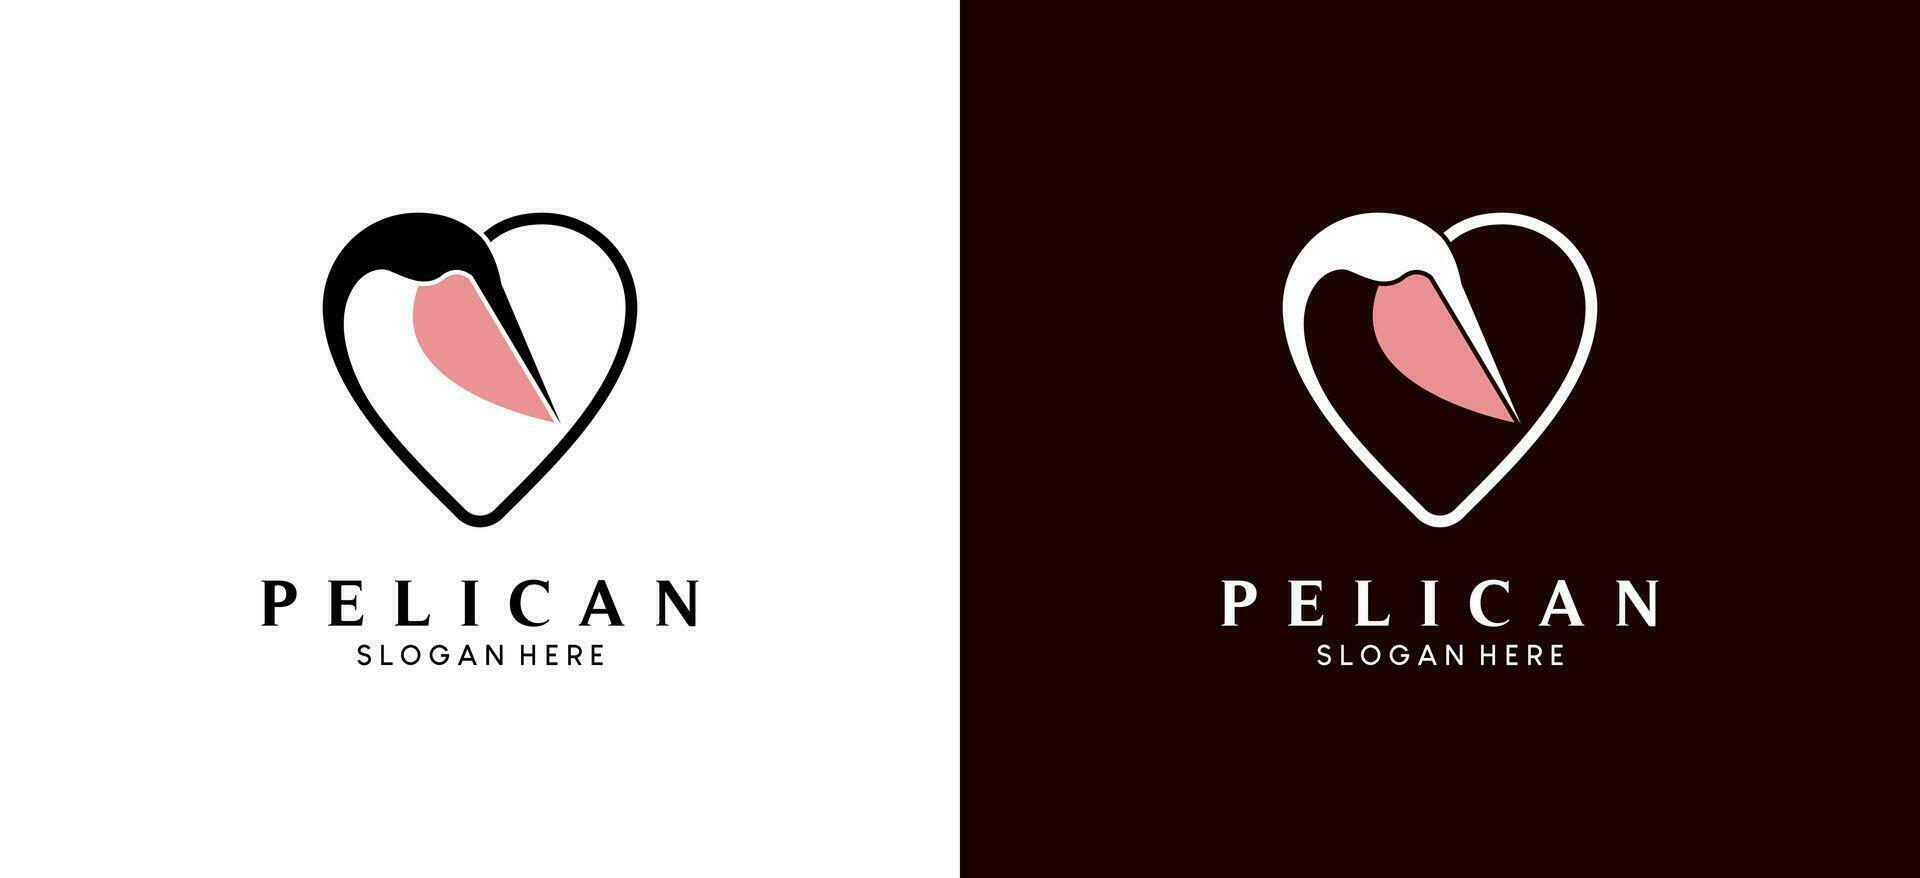 Pelican logo design vector illustration with creative love concept